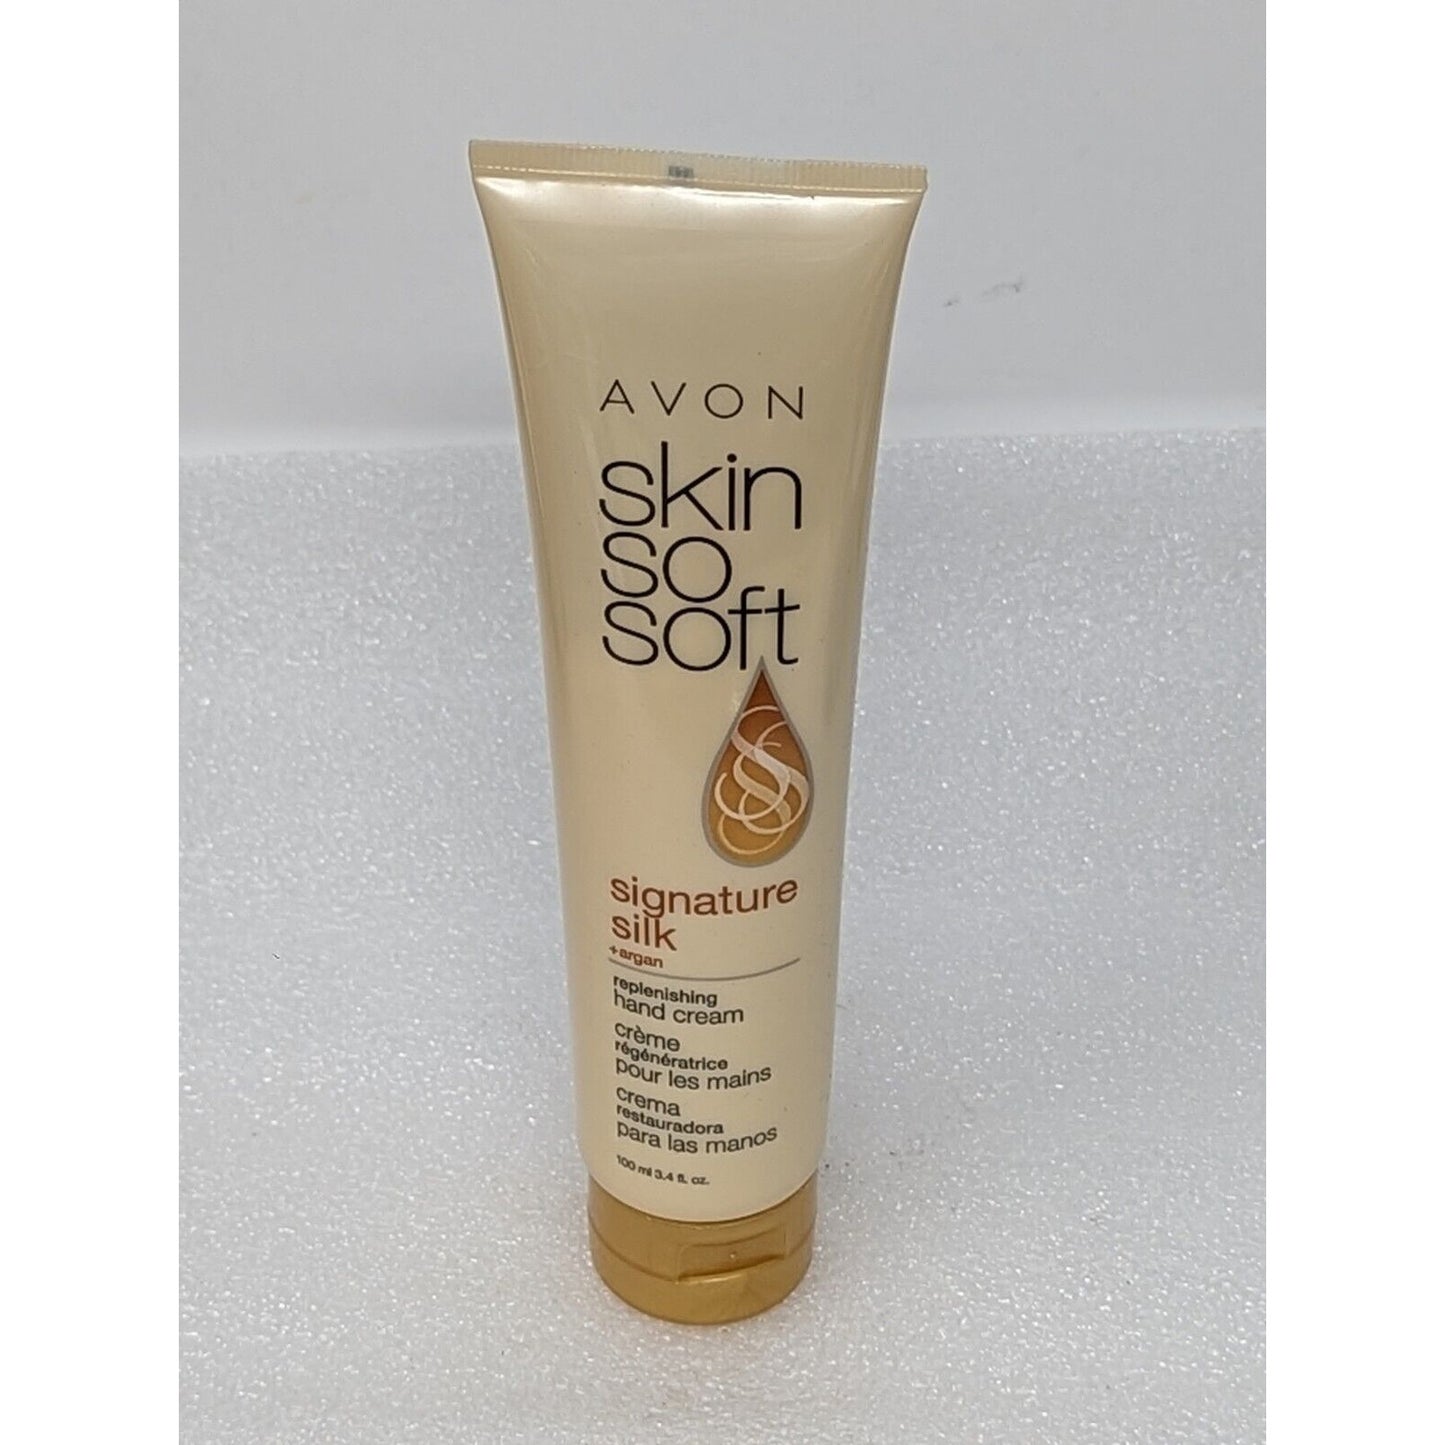 Avon Skin So Soft Signature Silk Argan Replenishing Hand Cream 3.4 oz